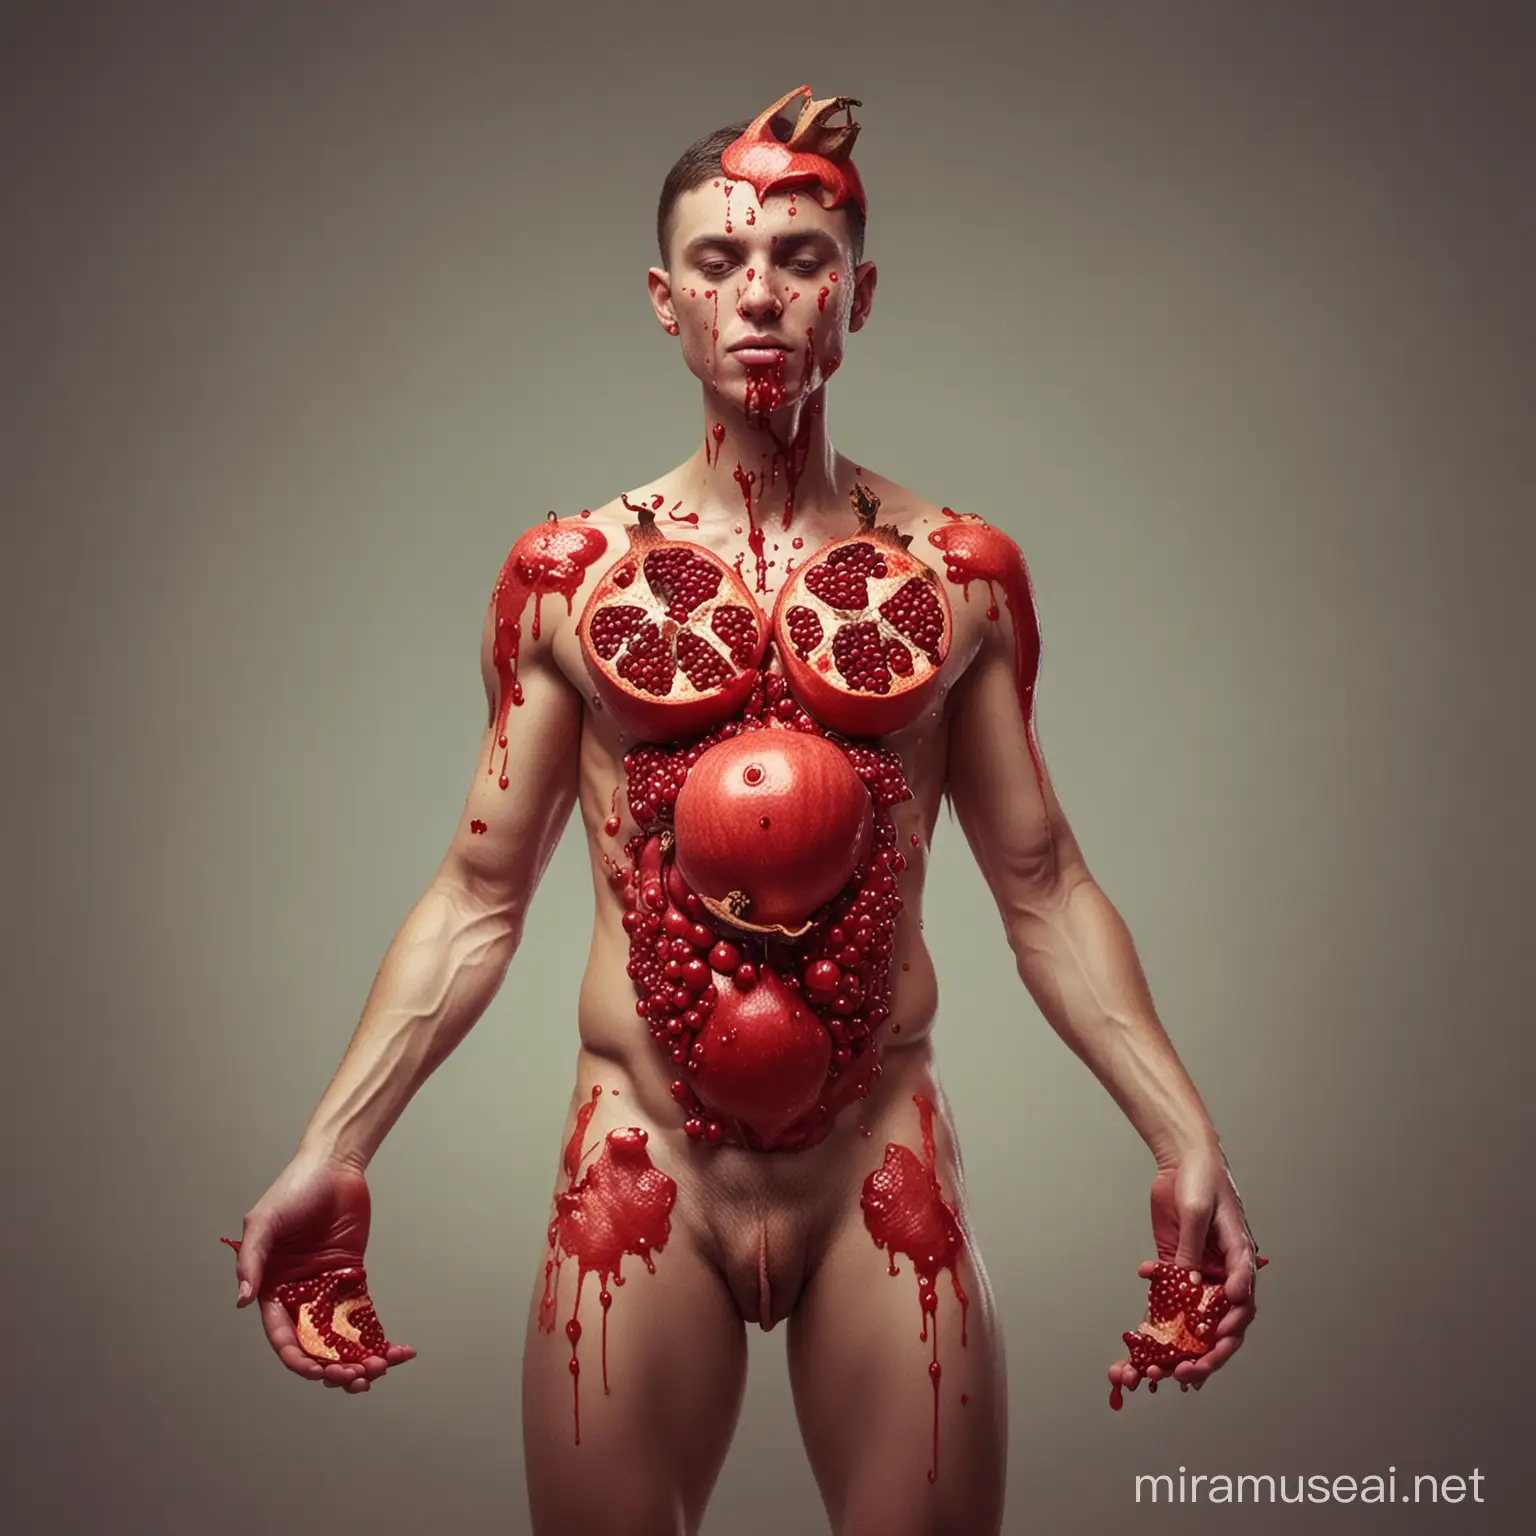 Surreal Human Figure with Pomegranate Body Surrealistic FruitCutting Scene